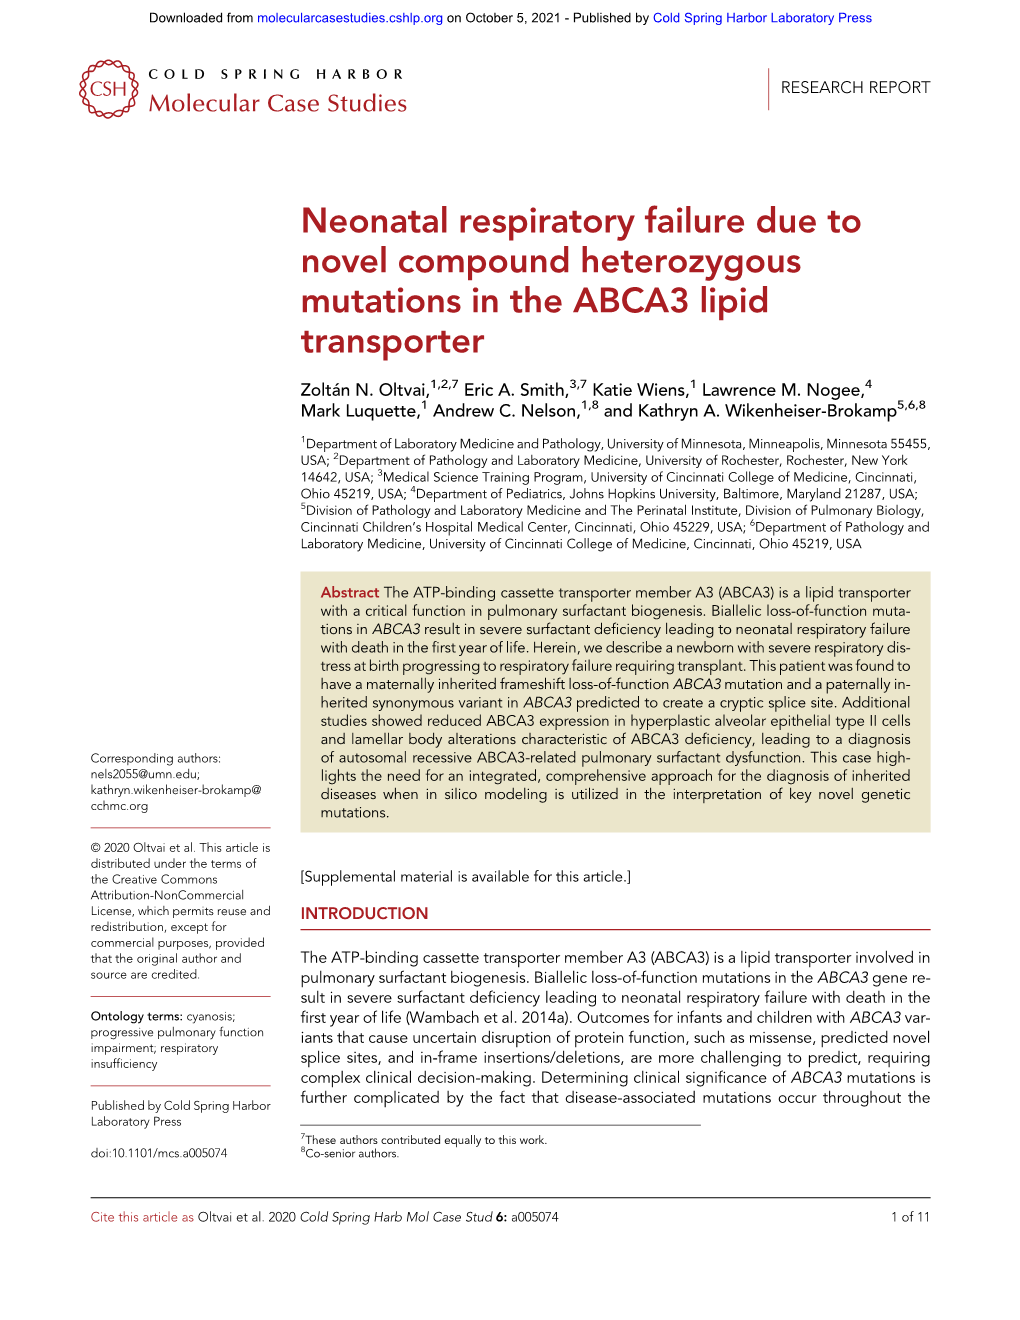 Neonatal Respiratory Failure Due to Novel Compound Heterozygous Mutations in the ABCA3 Lipid Transporter